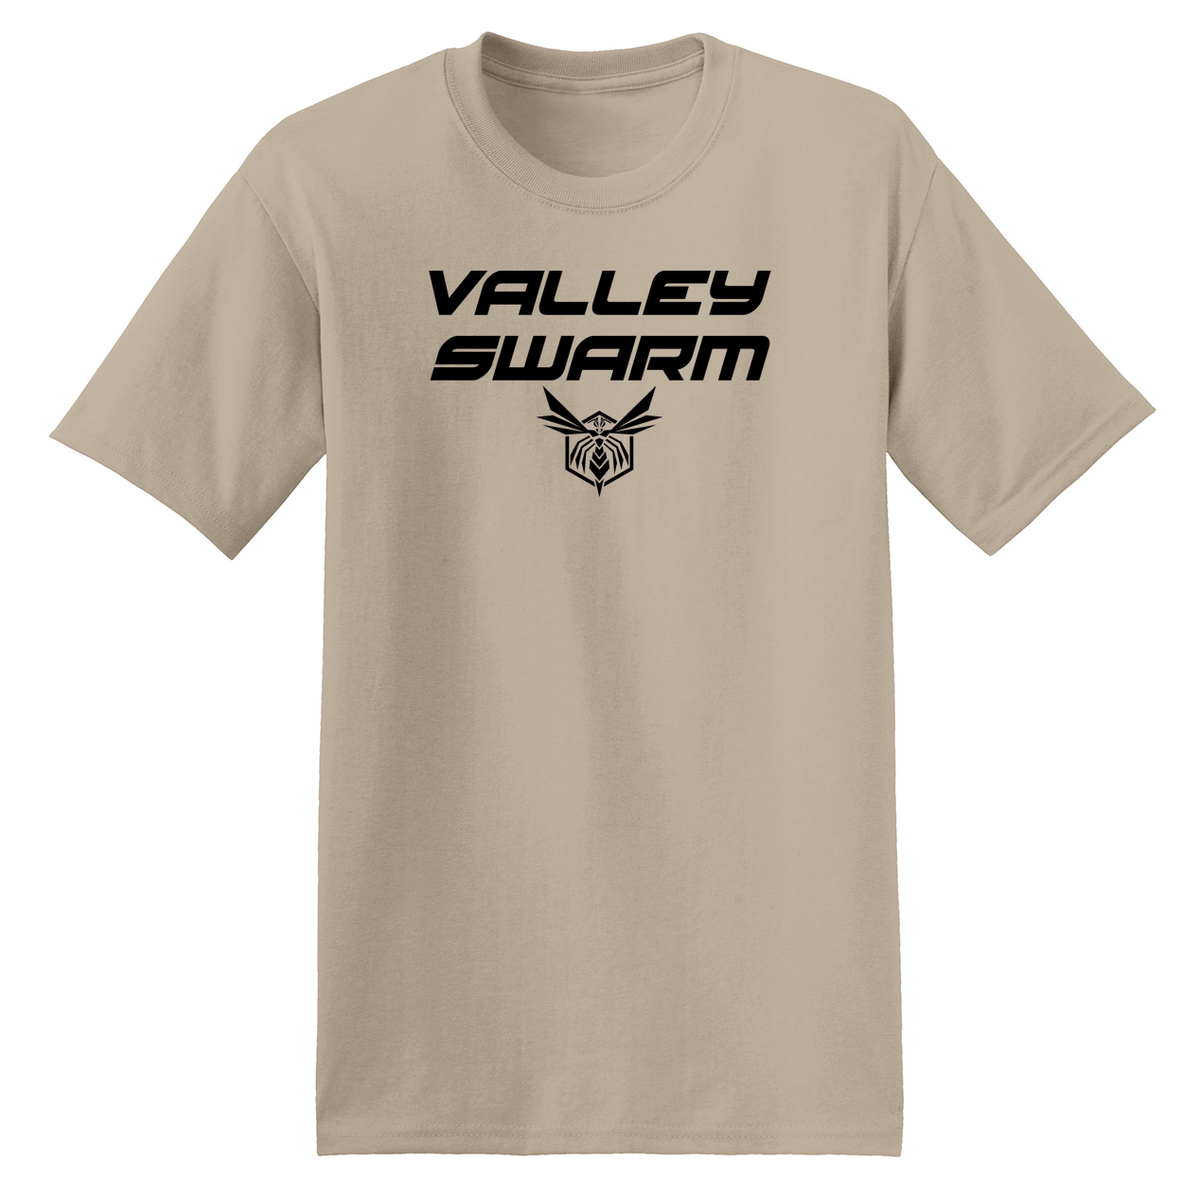 Valley Swarm T-Shirt